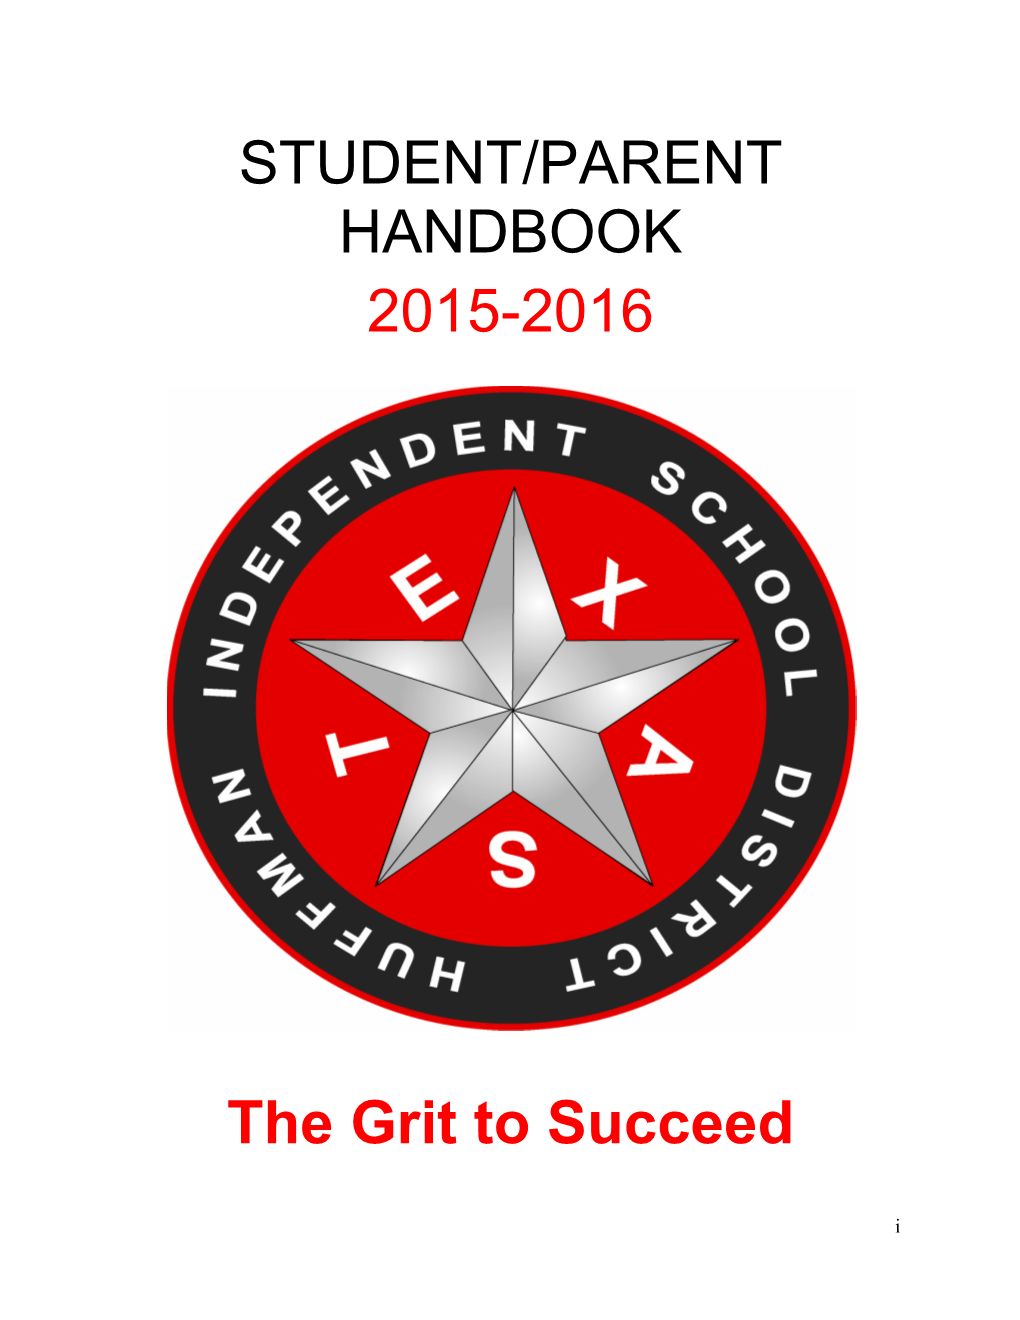 Student/Parent Handbook 2015-2016